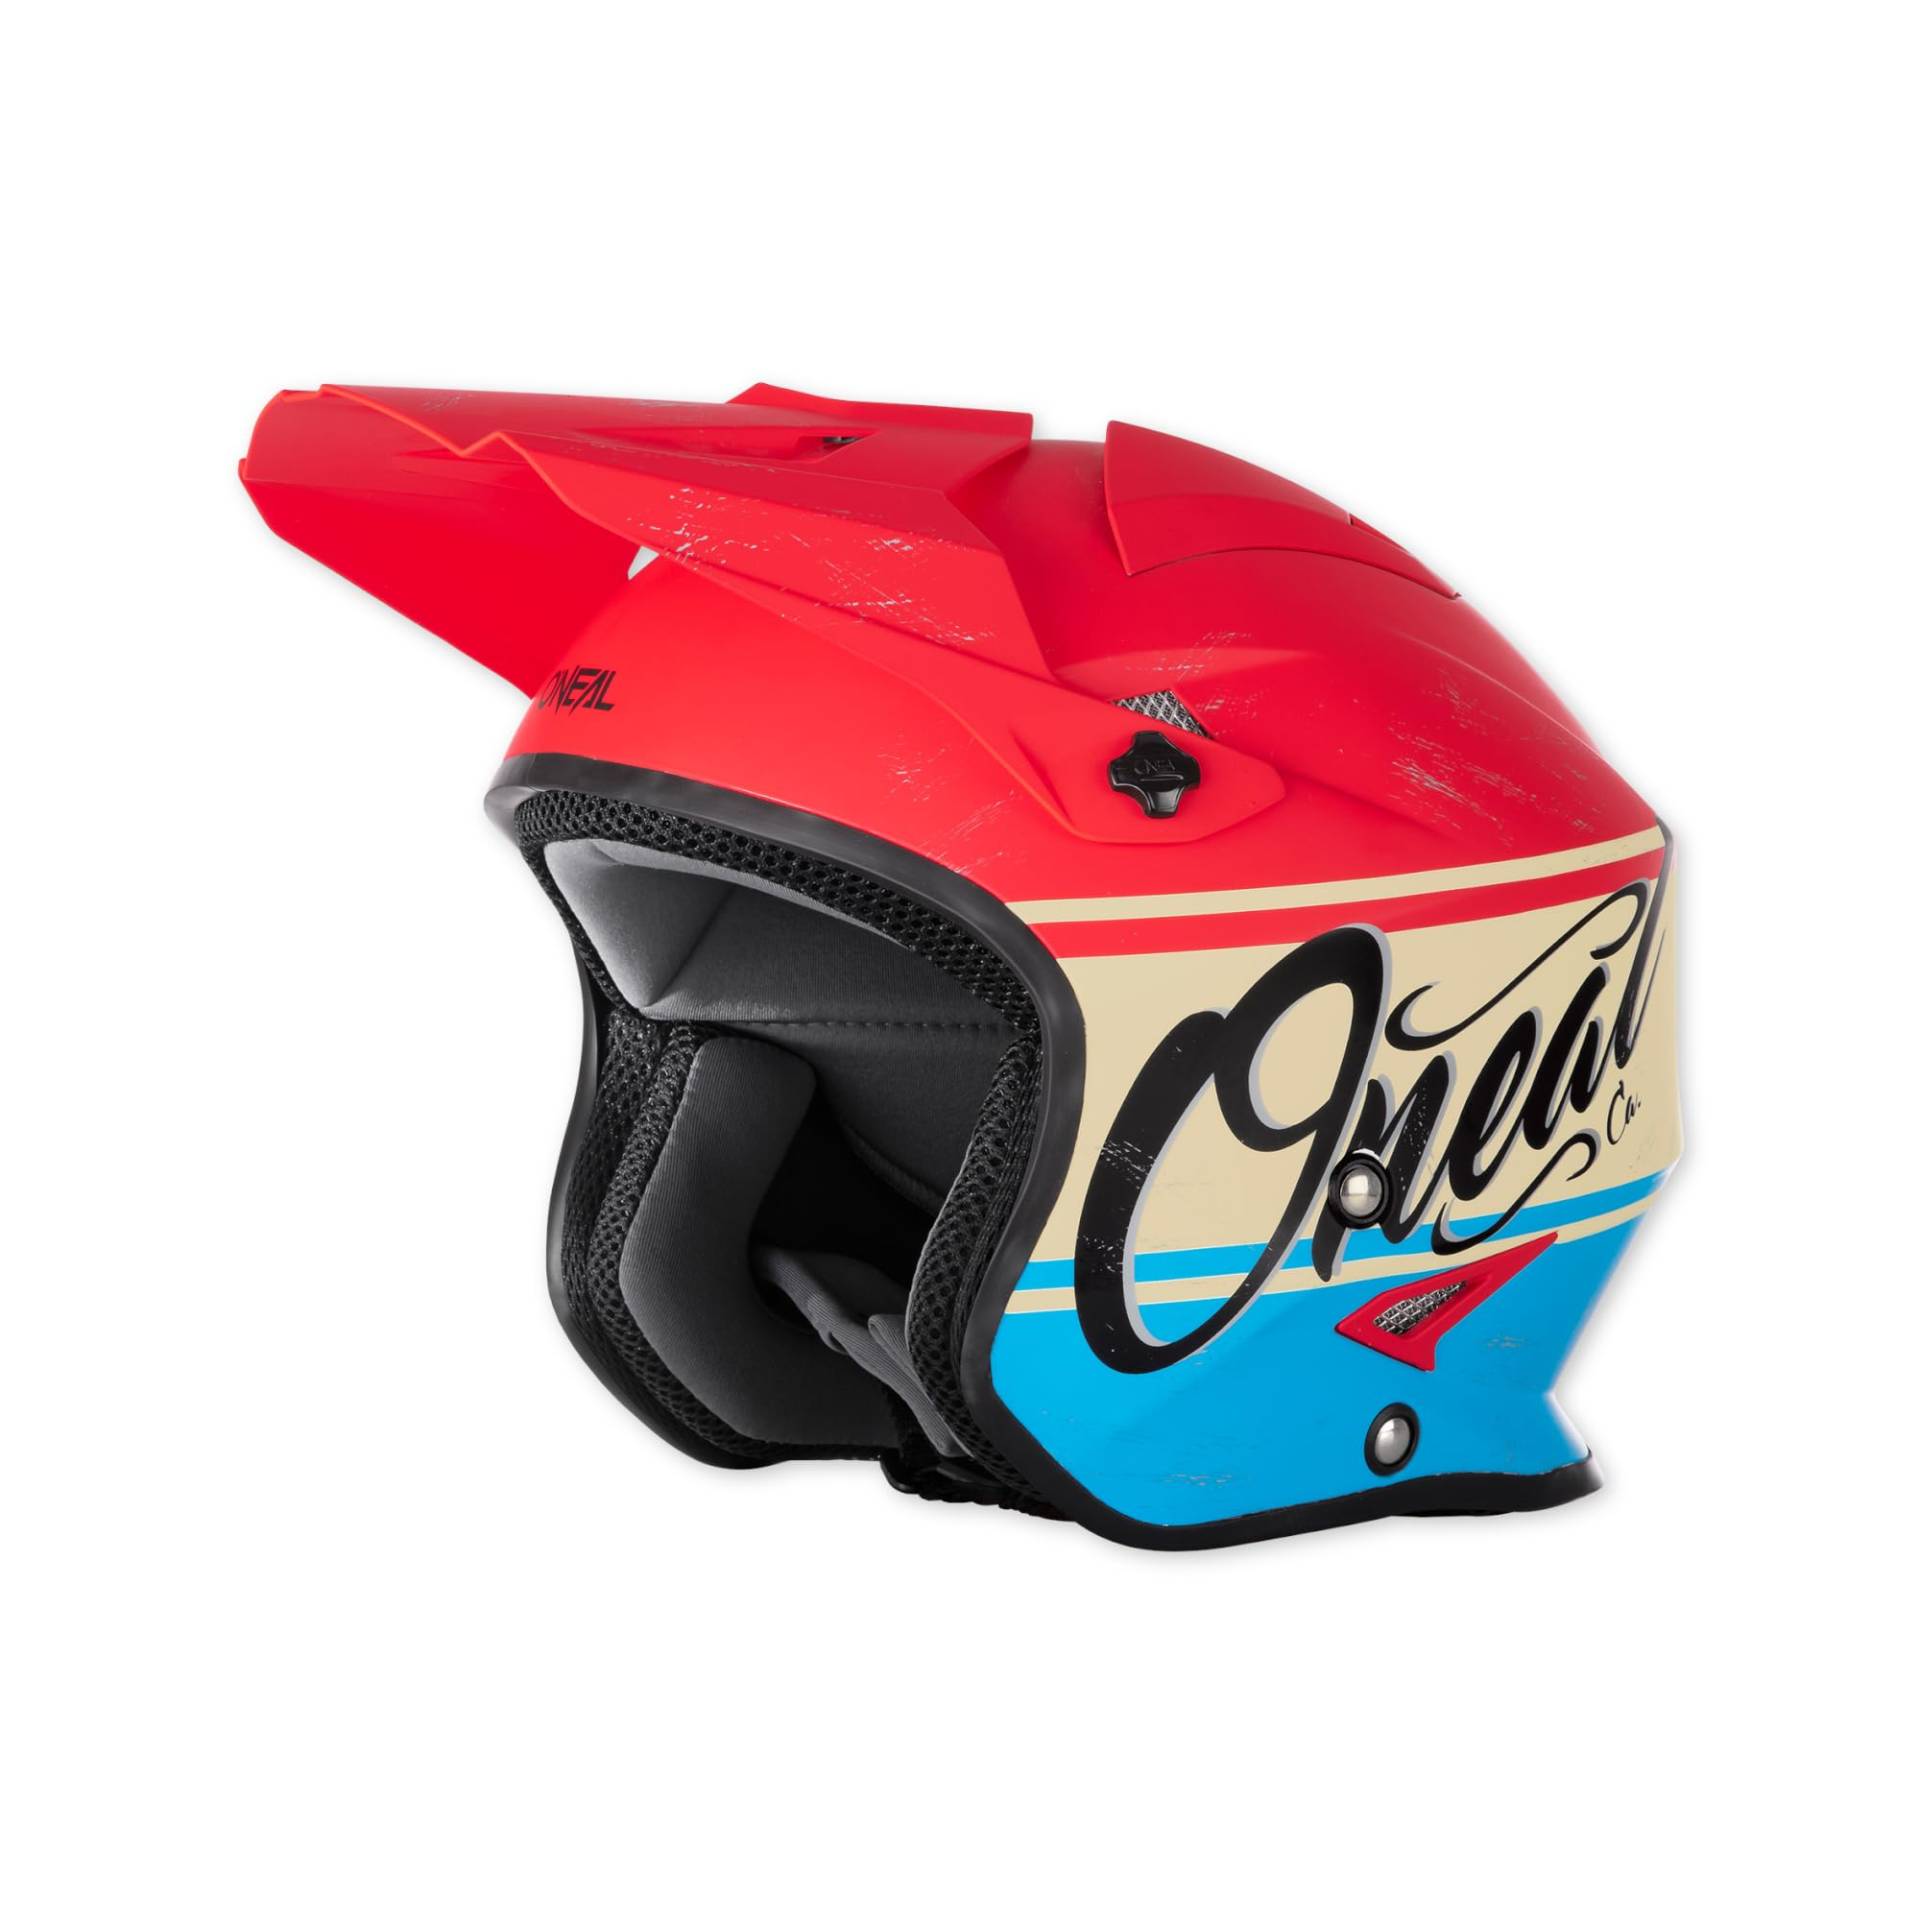 O'NEAL Slat Helmet Motorradhelm Herren Damen I Enduro Street Adventure I Fieberglas Jethelm mit waschbarem Innenfutter I I Rot Blau I Größe S von O'NEAL